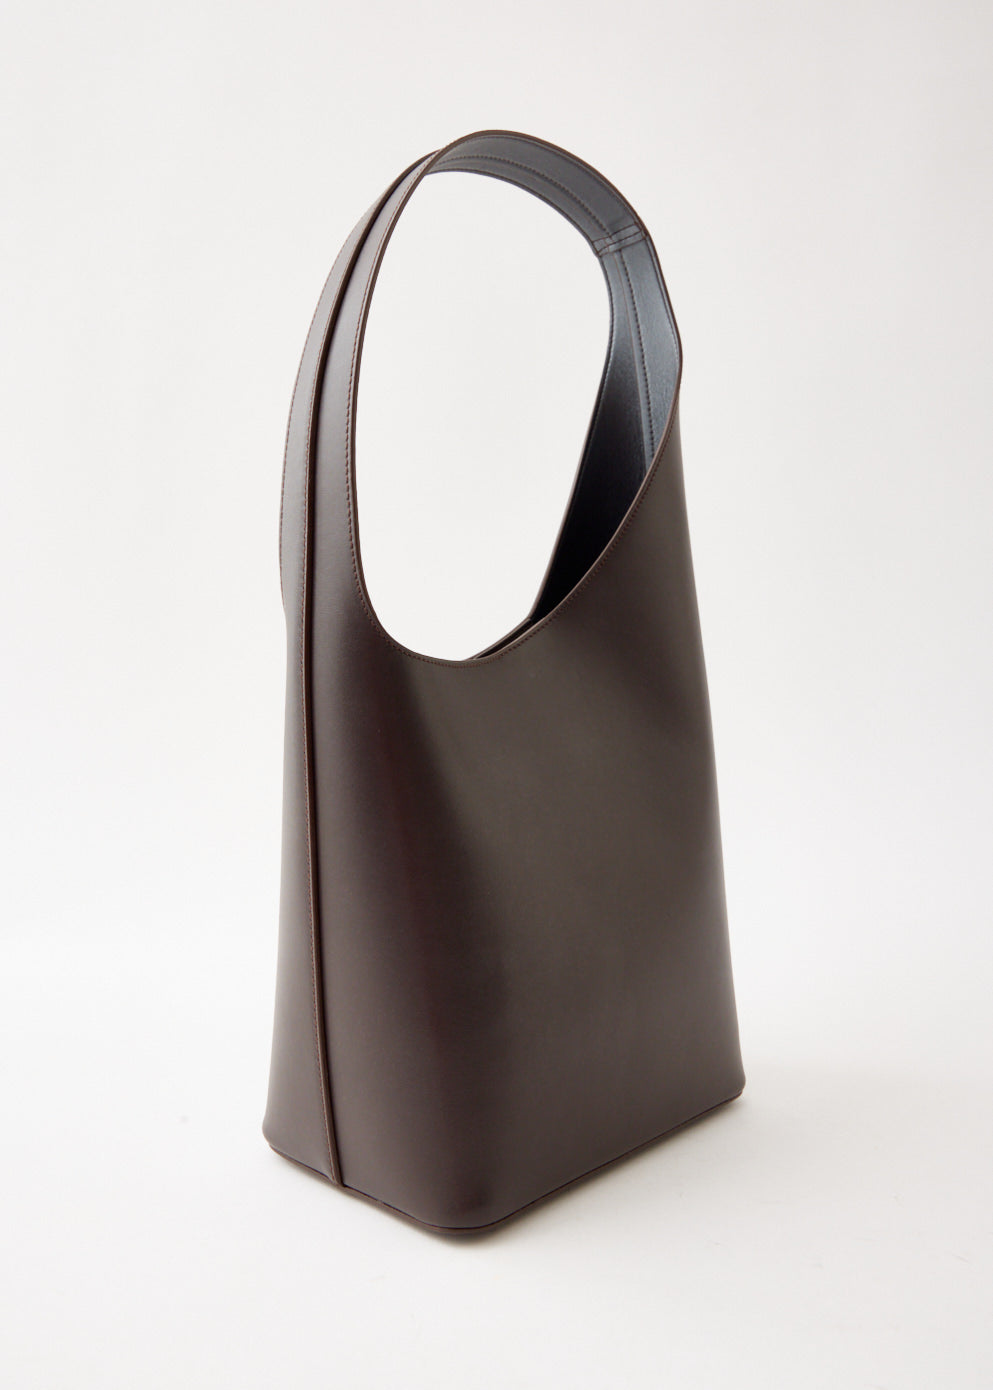 Aesther Ekme Demi Lune bag ฿19,590 💫 100% Calfskin 💫 Adjustable